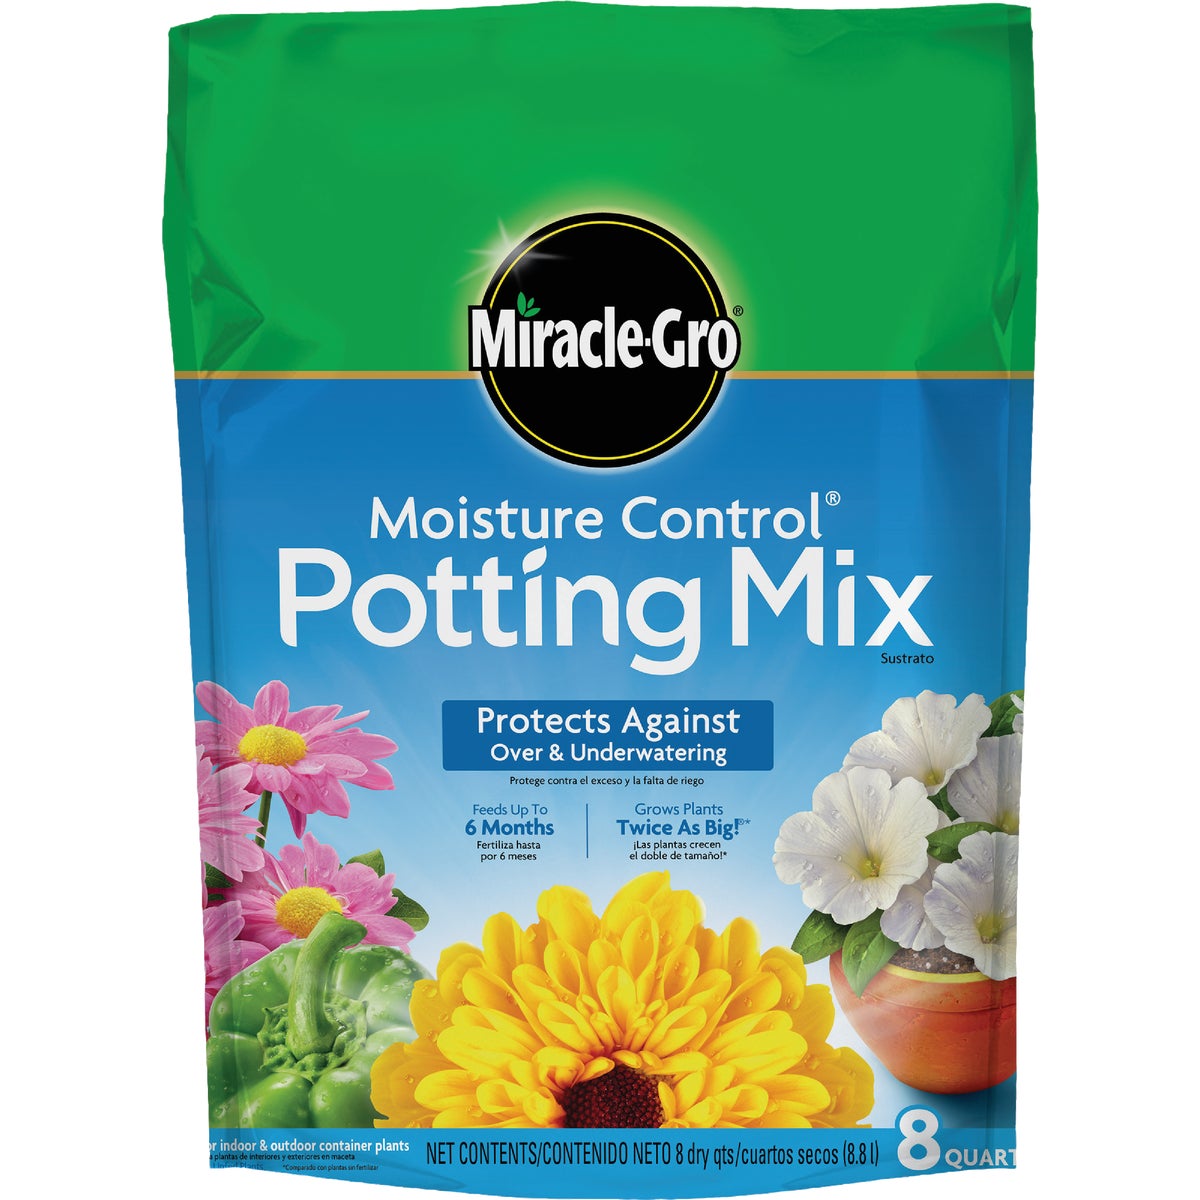 Item 767771, Miracle-Gro Moisture Control potting soil mix.